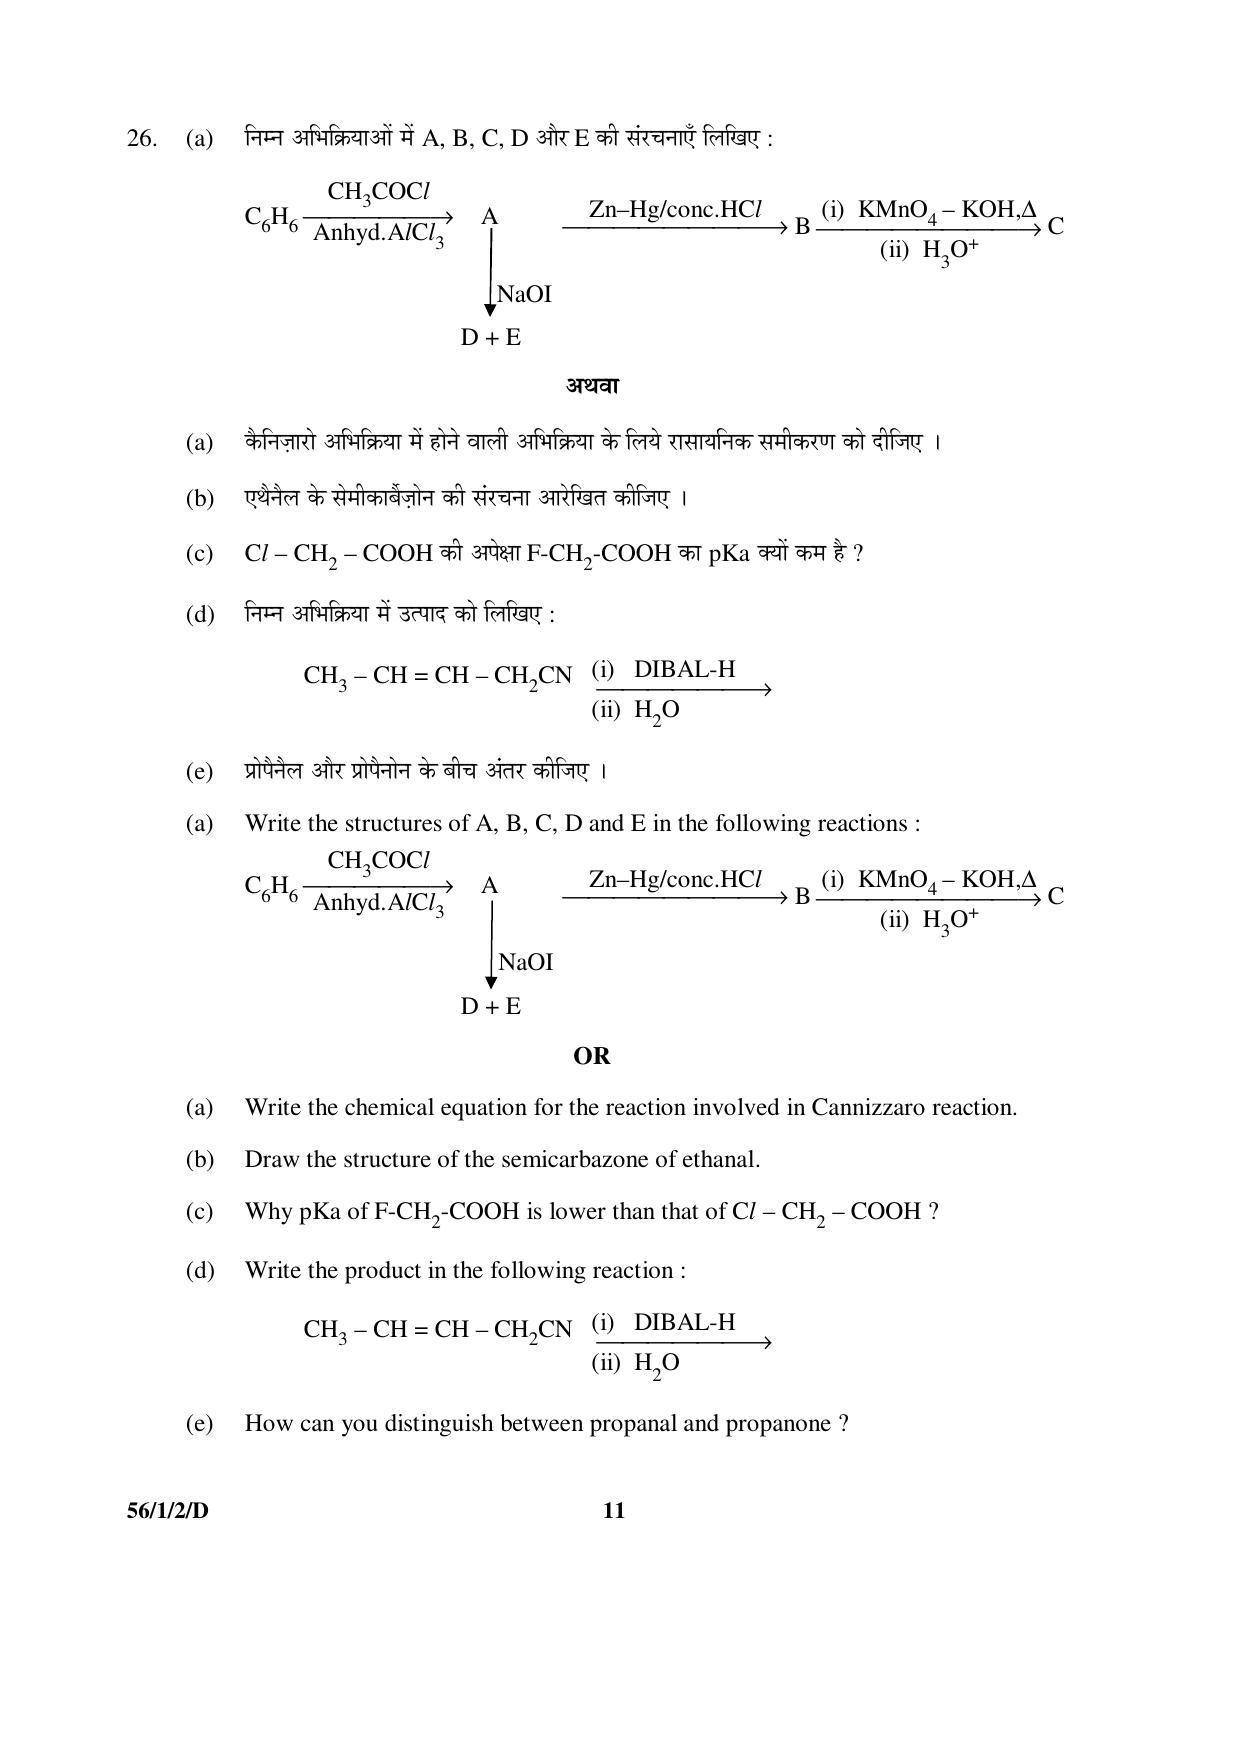 CBSE Class 12 56-1-2-D CHEMISTRY 2016 Question Paper - Page 11